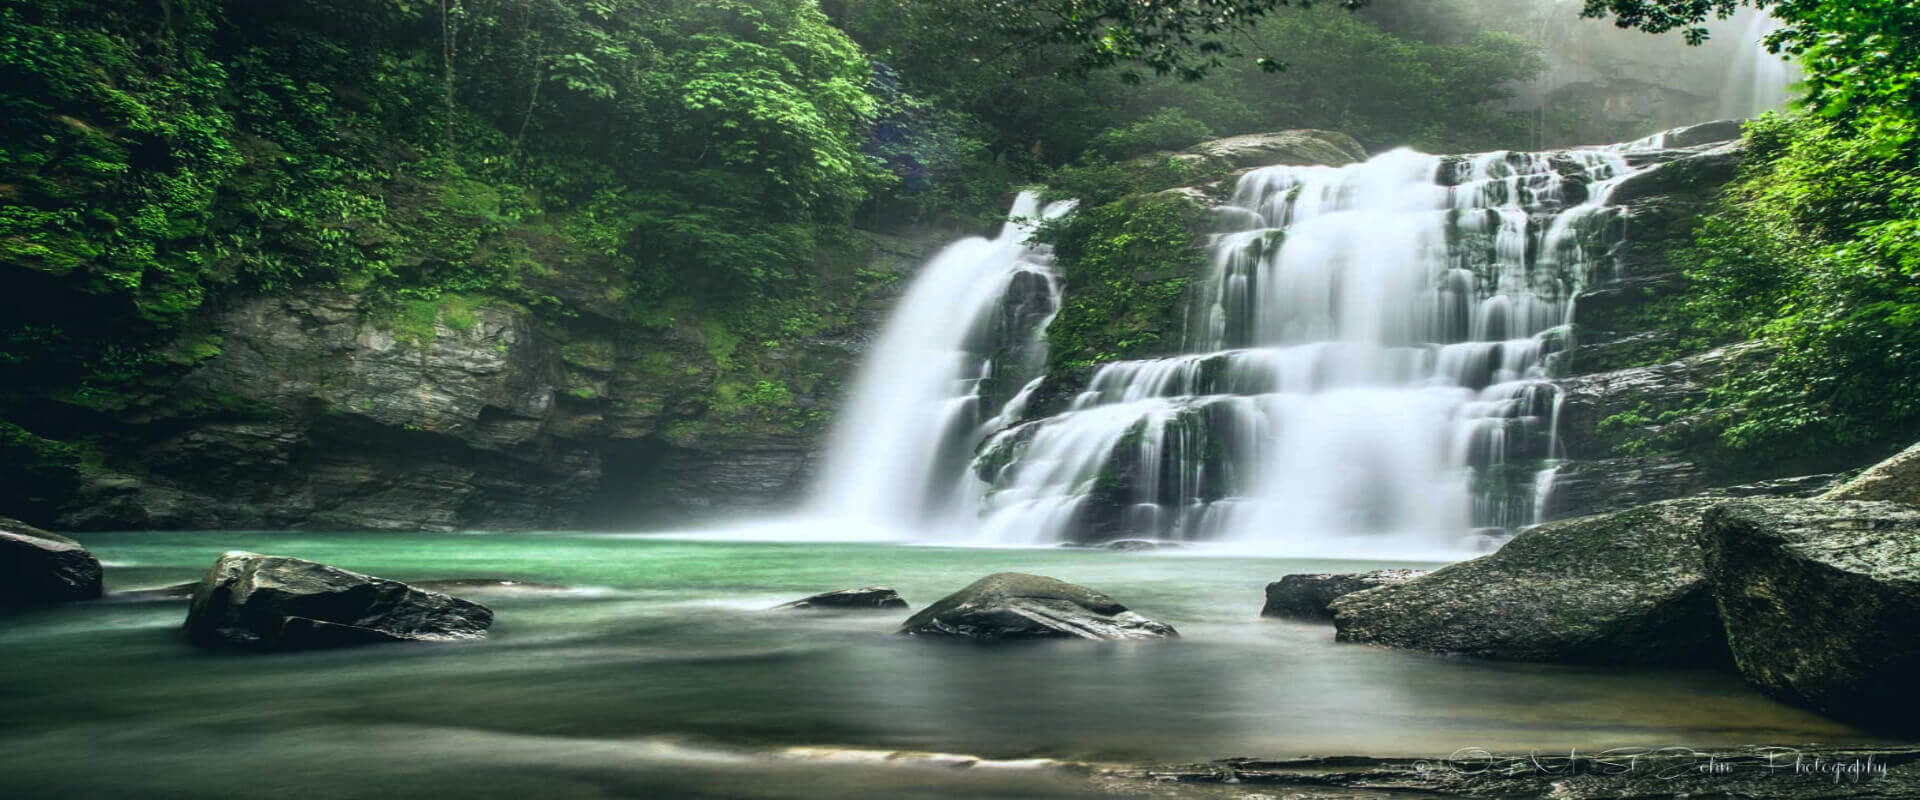 Nauyaca Waterfalls tour in Manuel Antonio | Costa Rica Jade Tours